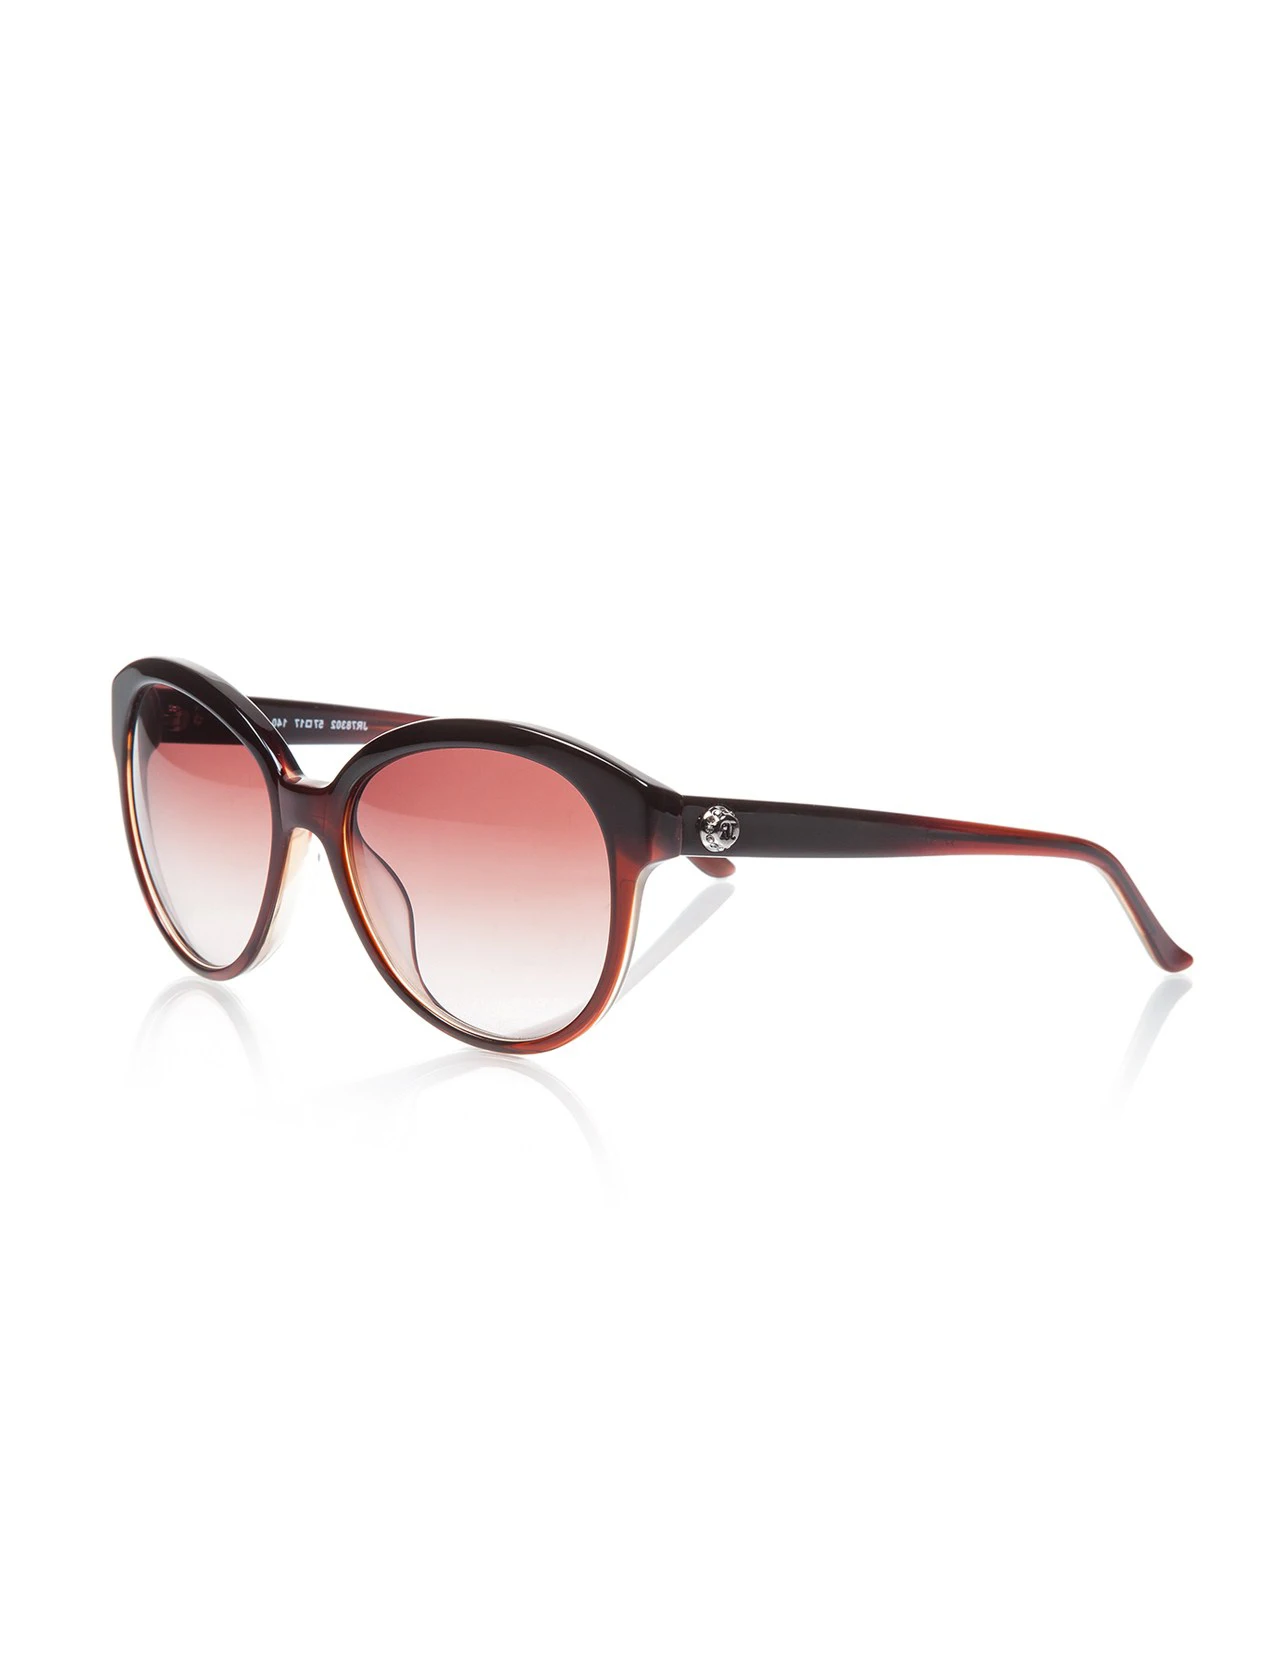 

Women's sunglasses jr 783 02 57 bone Brown organic oval aval 57-17-140 john richmond